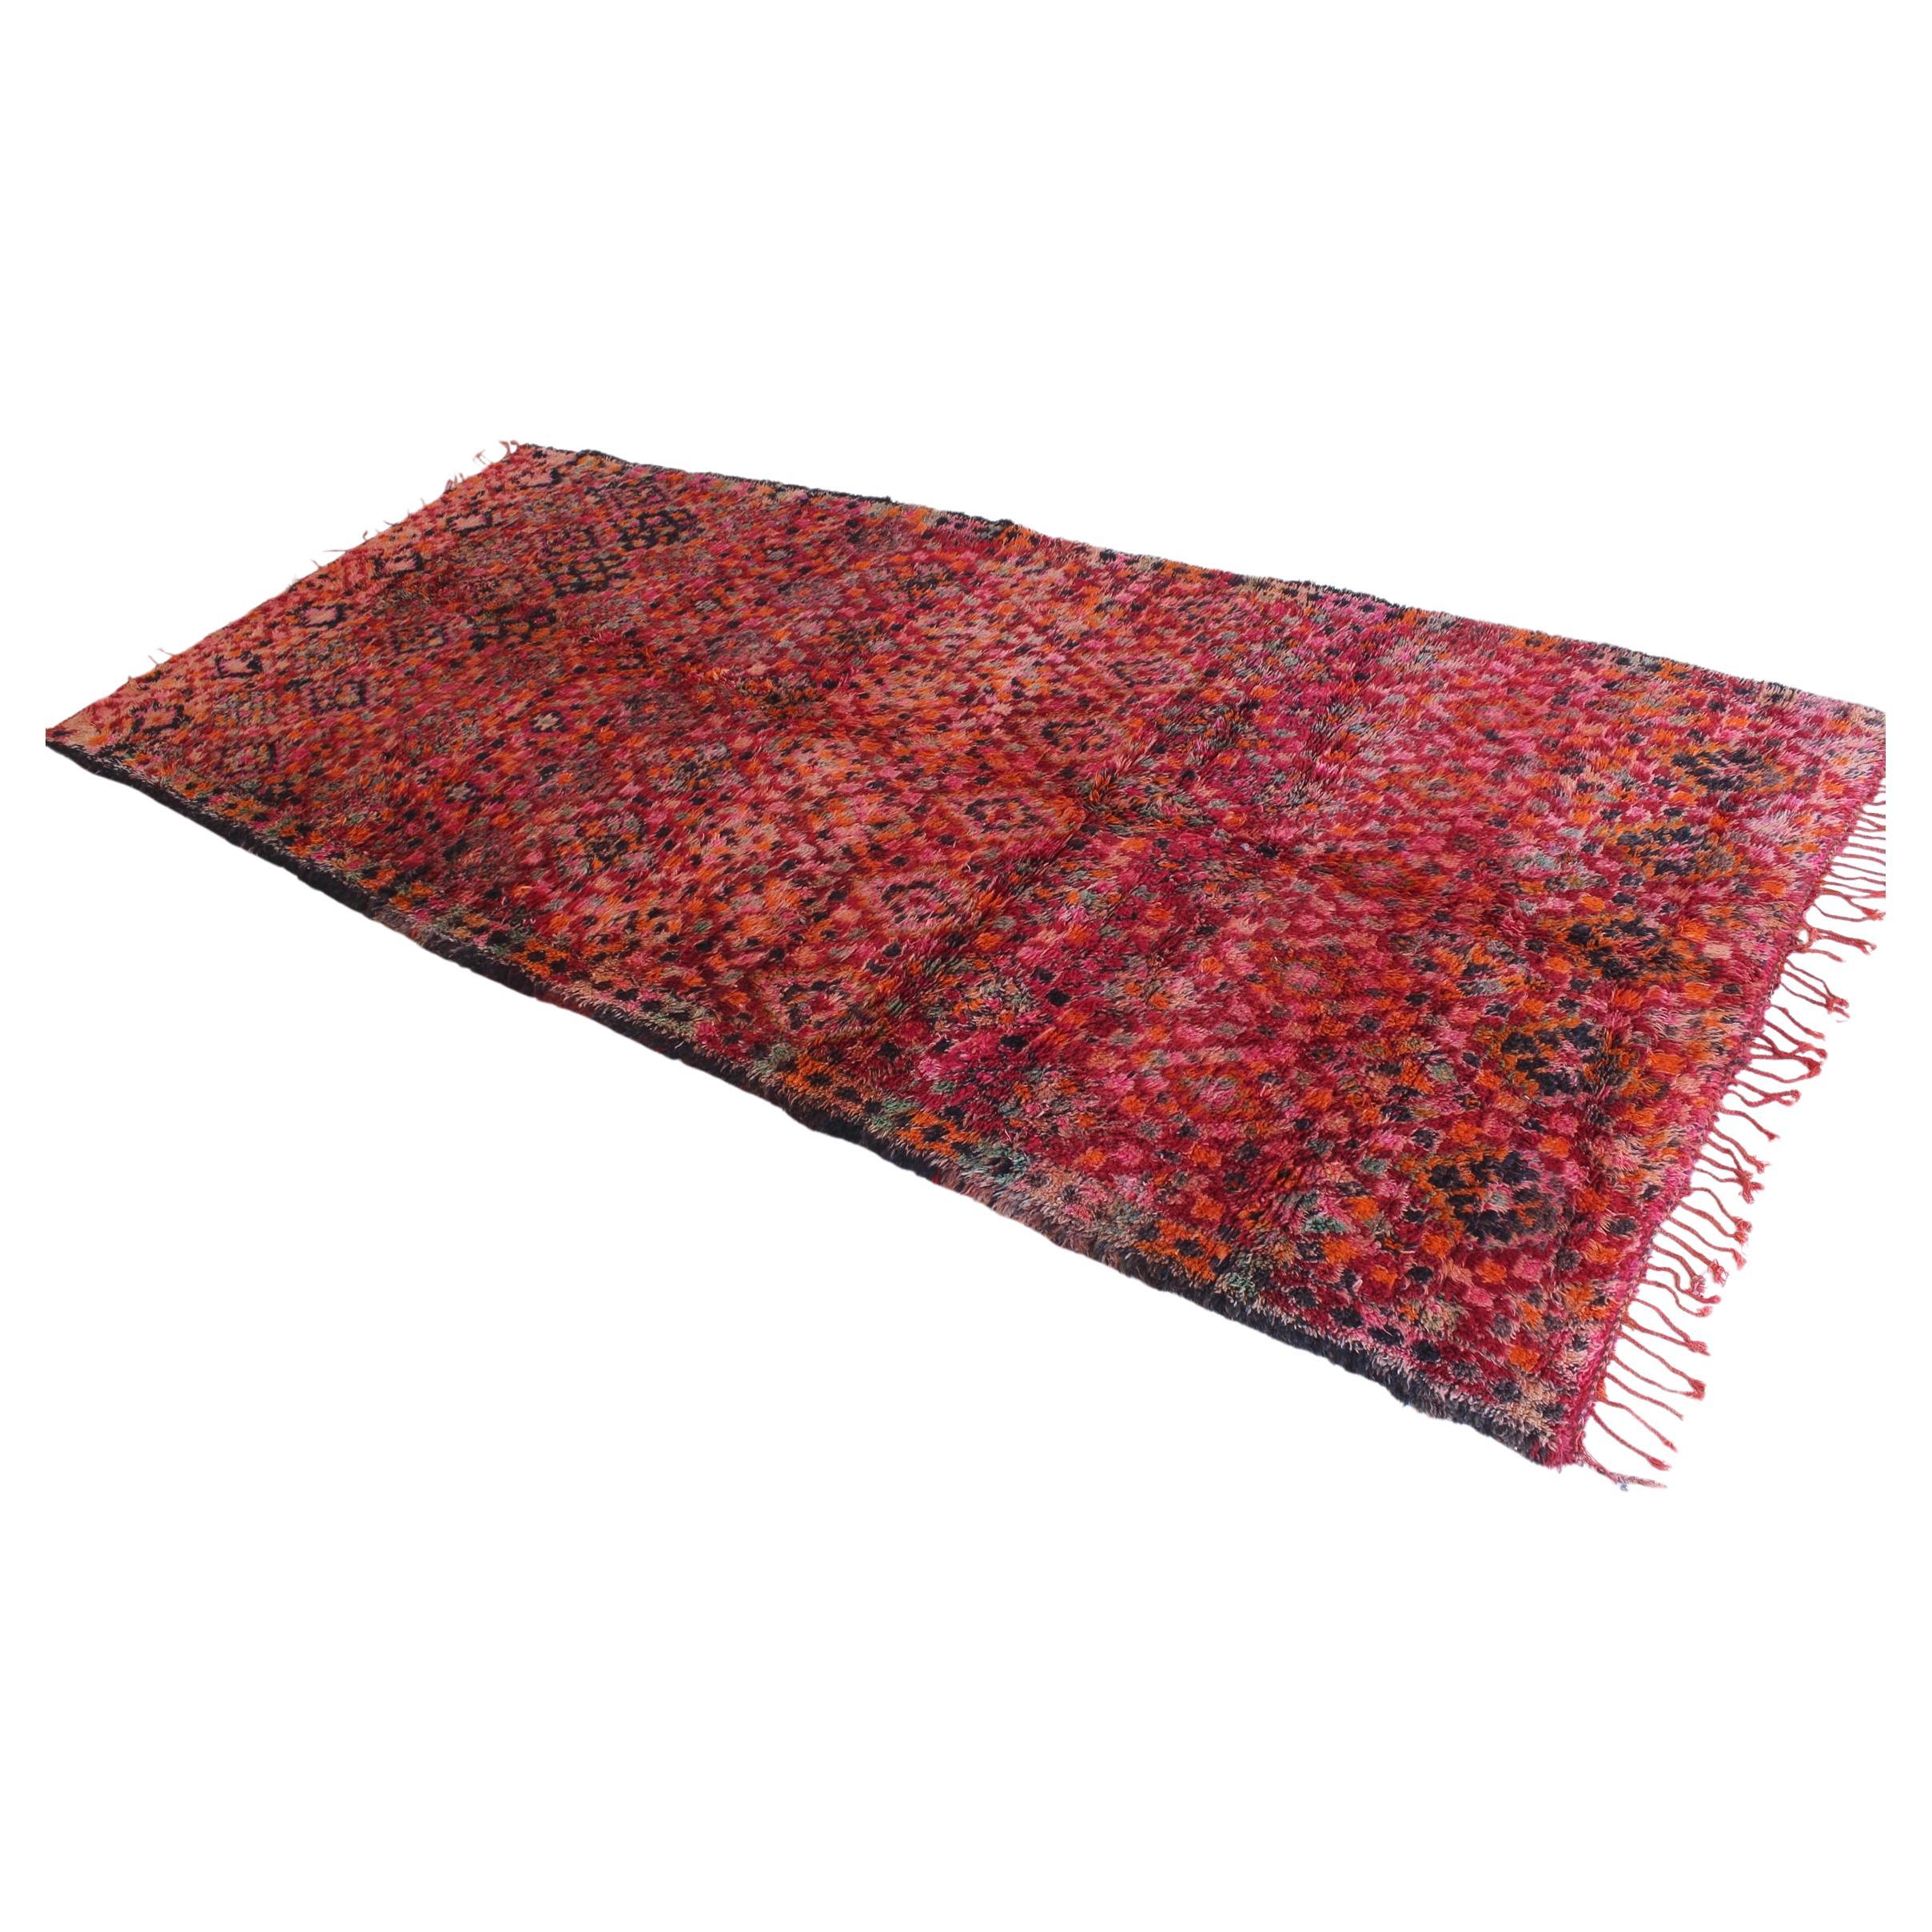 Vintage Moroccan Beni Mguild rug - Red - 6.5x14.3feet / 200x437cm For Sale